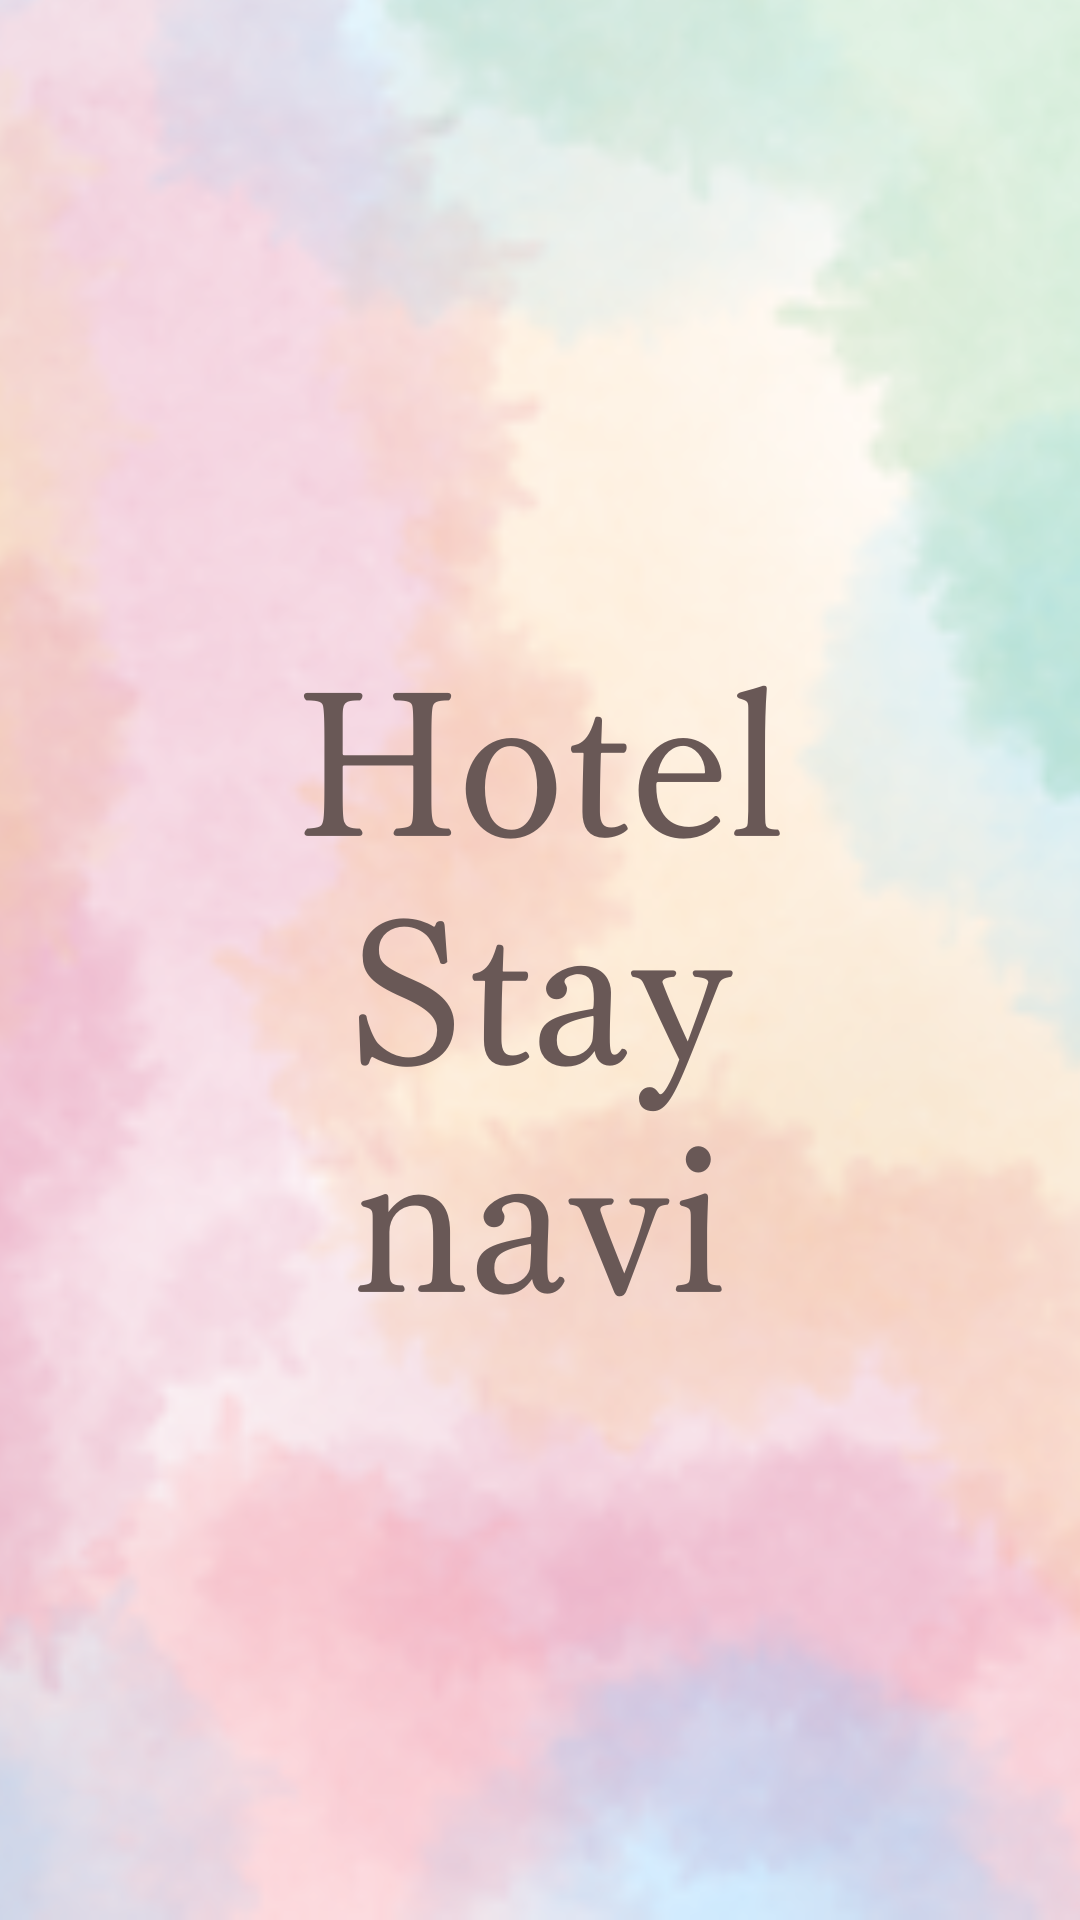 Hotel Stay naviのアバター